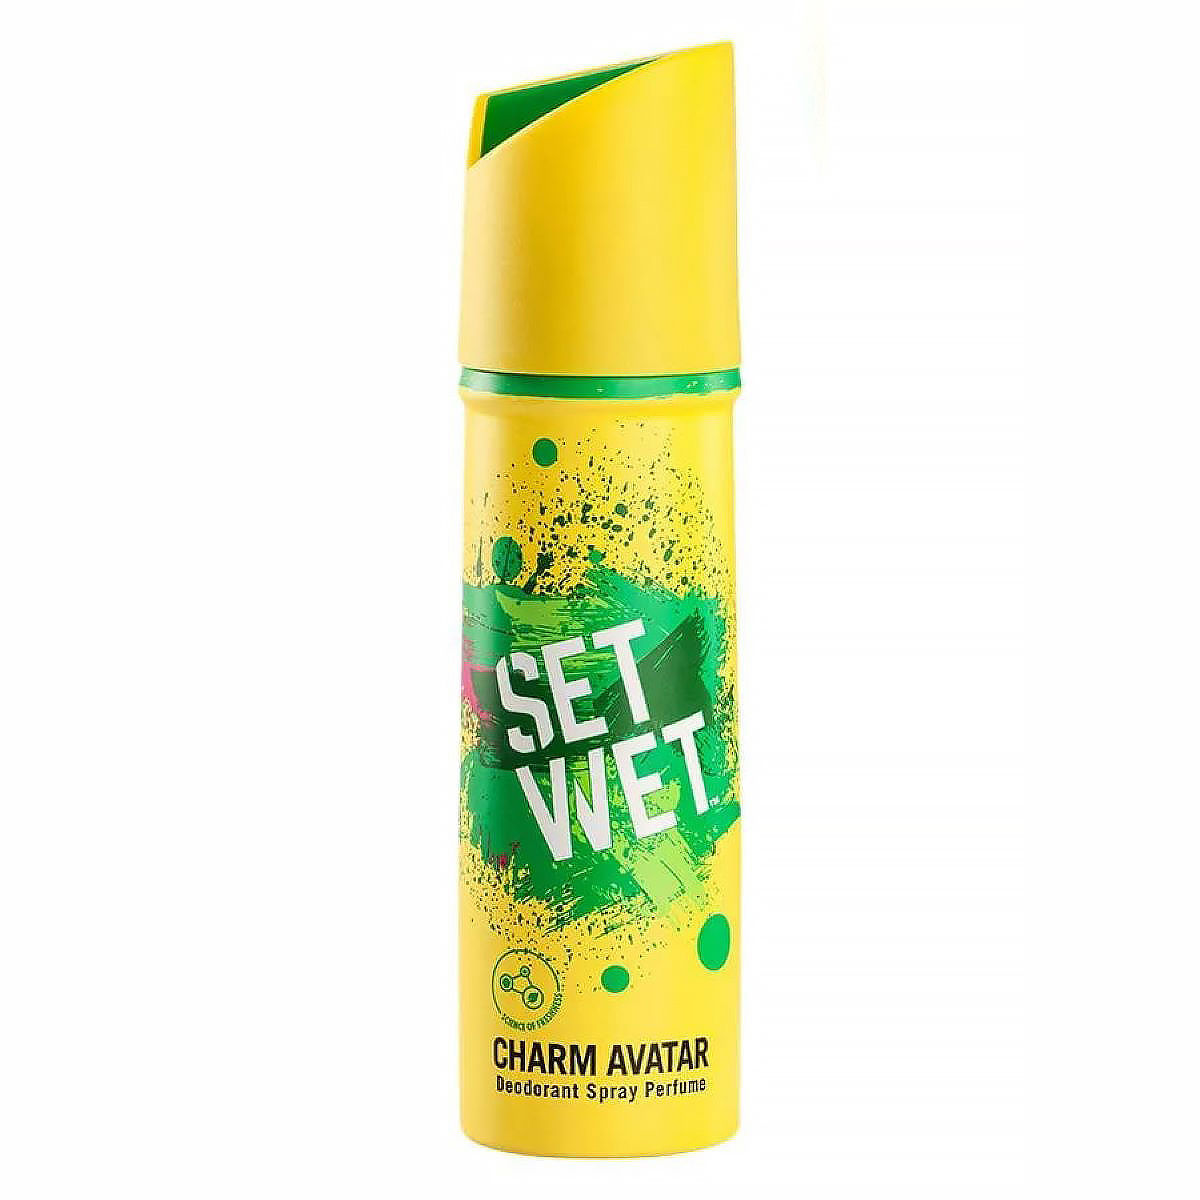 Set Wet Charm Avatar Deodorant Body Spray, 150 ml, Pack of 1 